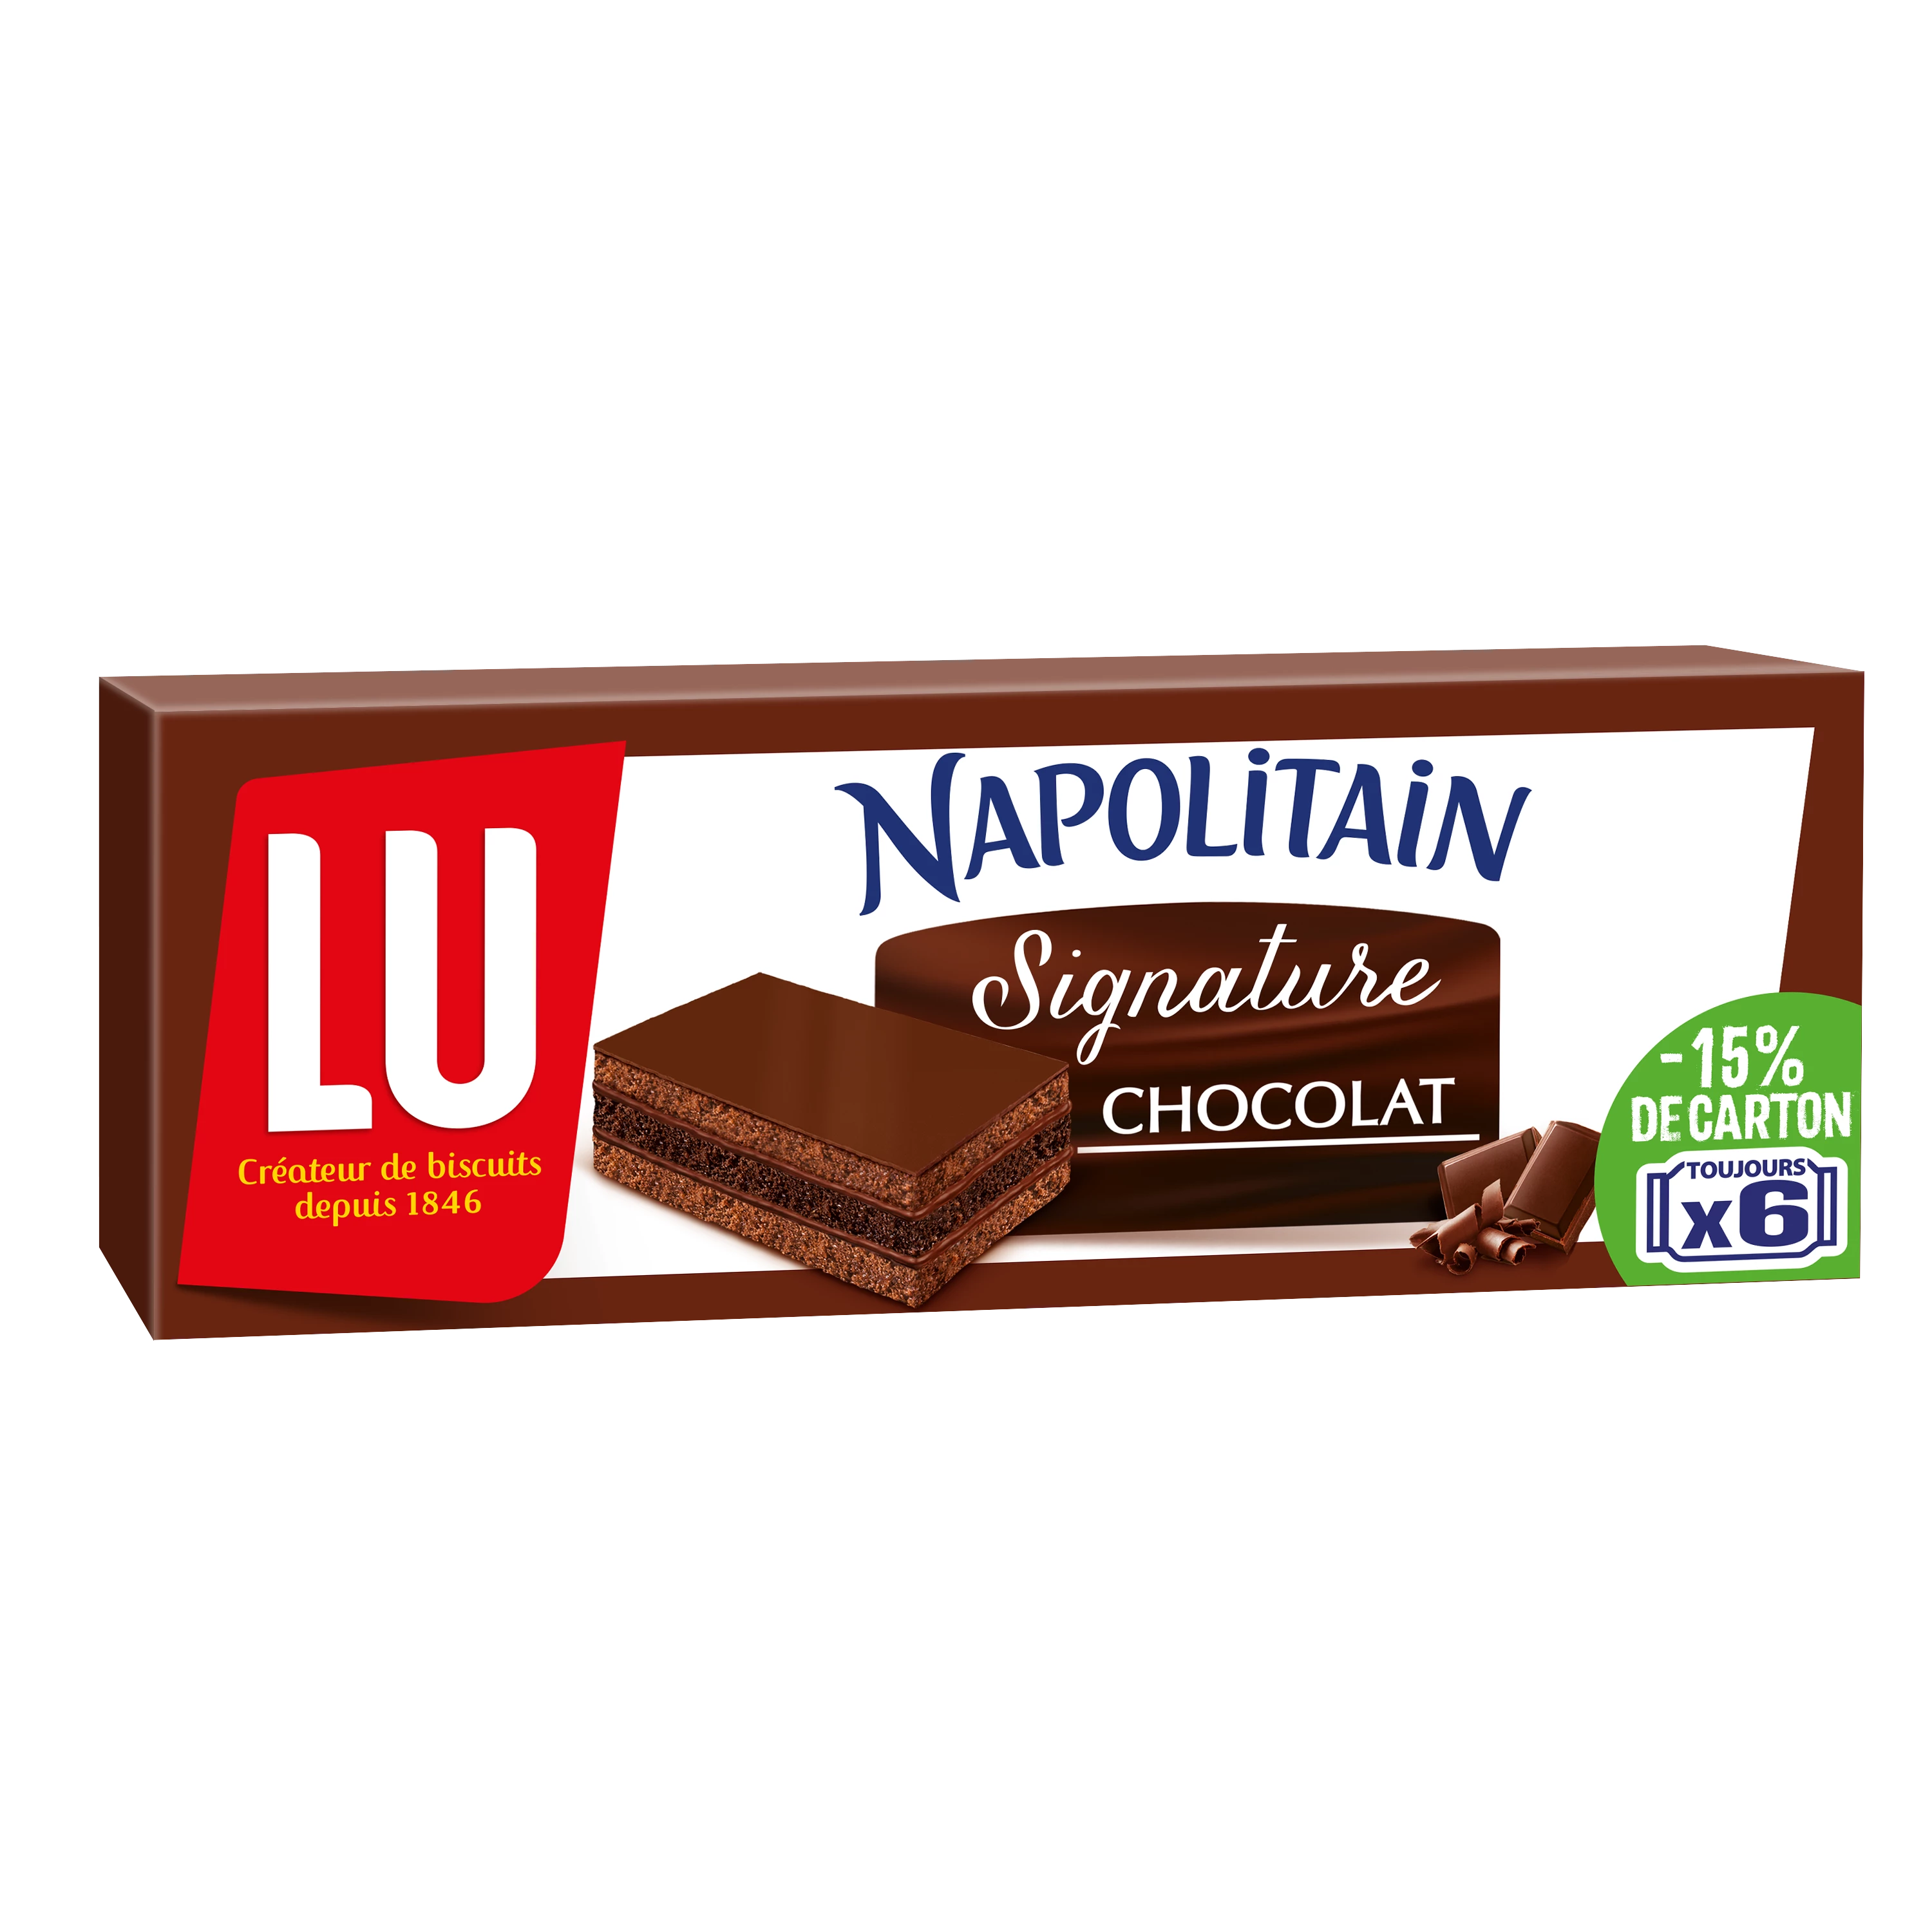 Gâteau Napolitain Signature Chocolat, 174g - LU